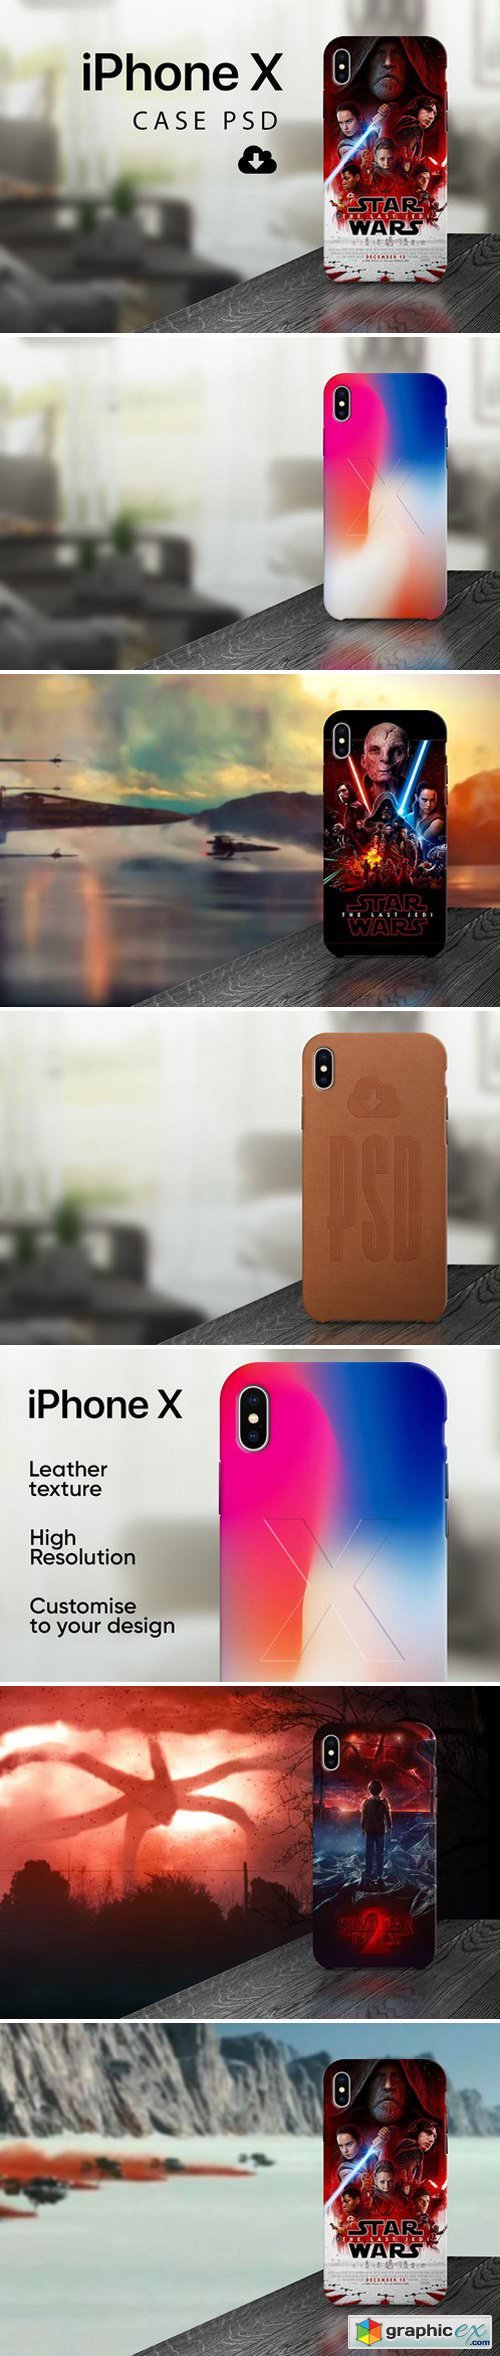 iPhone X - Case PSD mockup